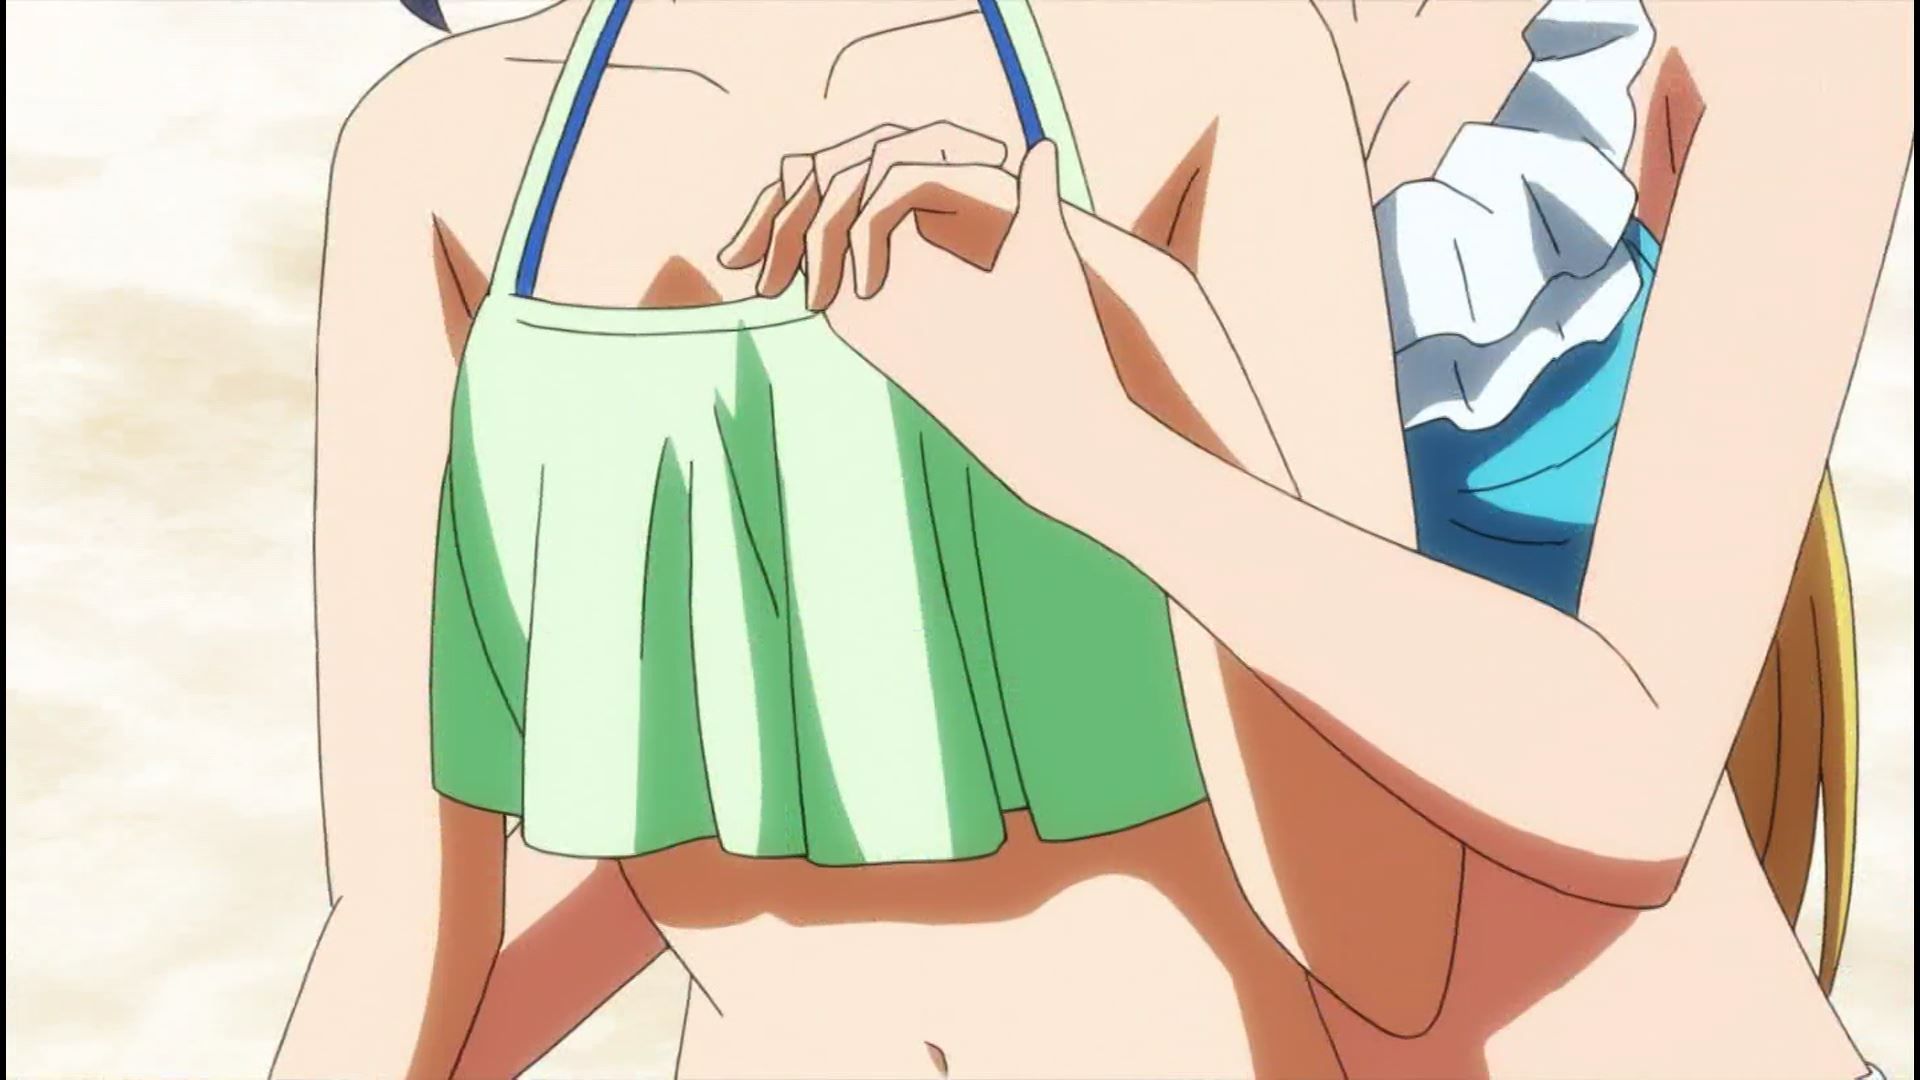 Anime [22/7 (Nanabun Nonijuuni)] 6 episodes erotic scene of girls erotic swimsuit! 4